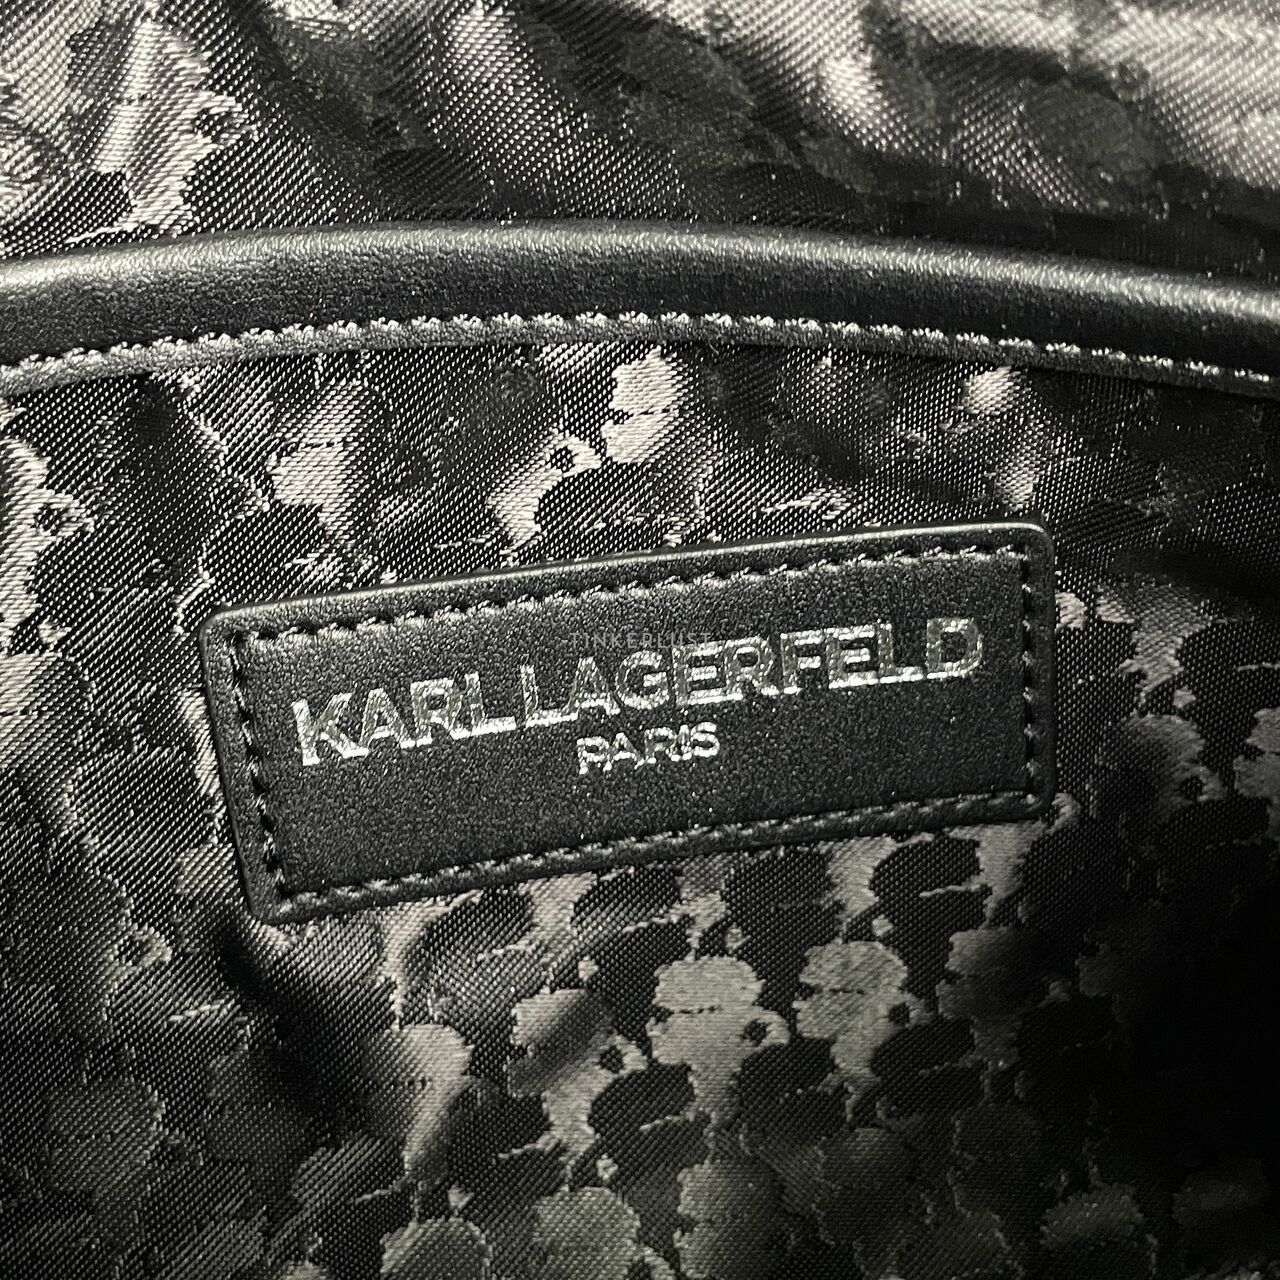 Karl Lagerfeld LH1LU604 Maybelle Black Large Wristlet